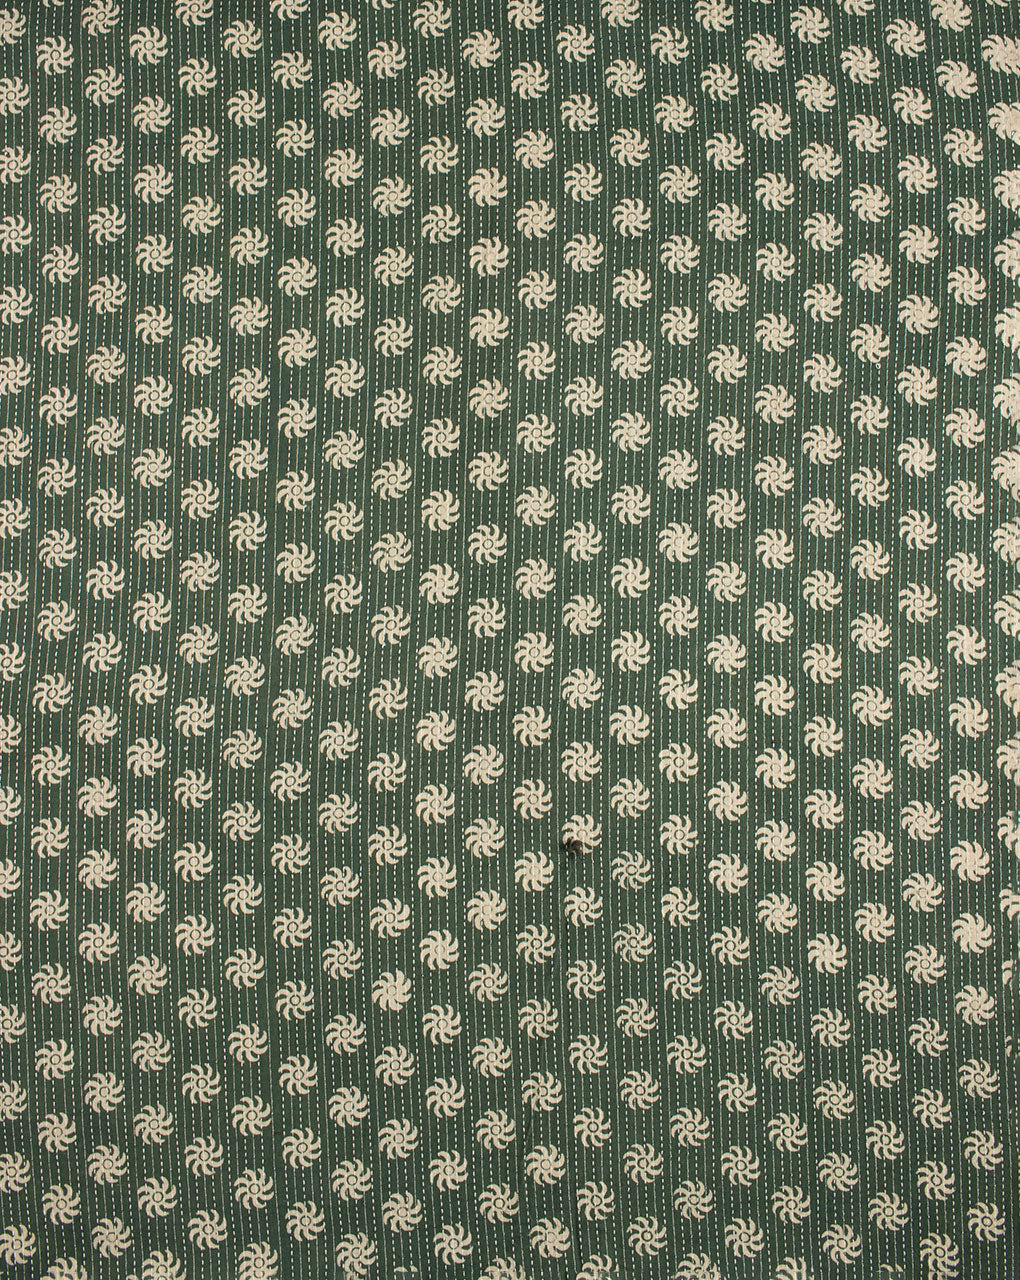 Discharge Print Kantha Cotton Fabric - Fabriclore.com